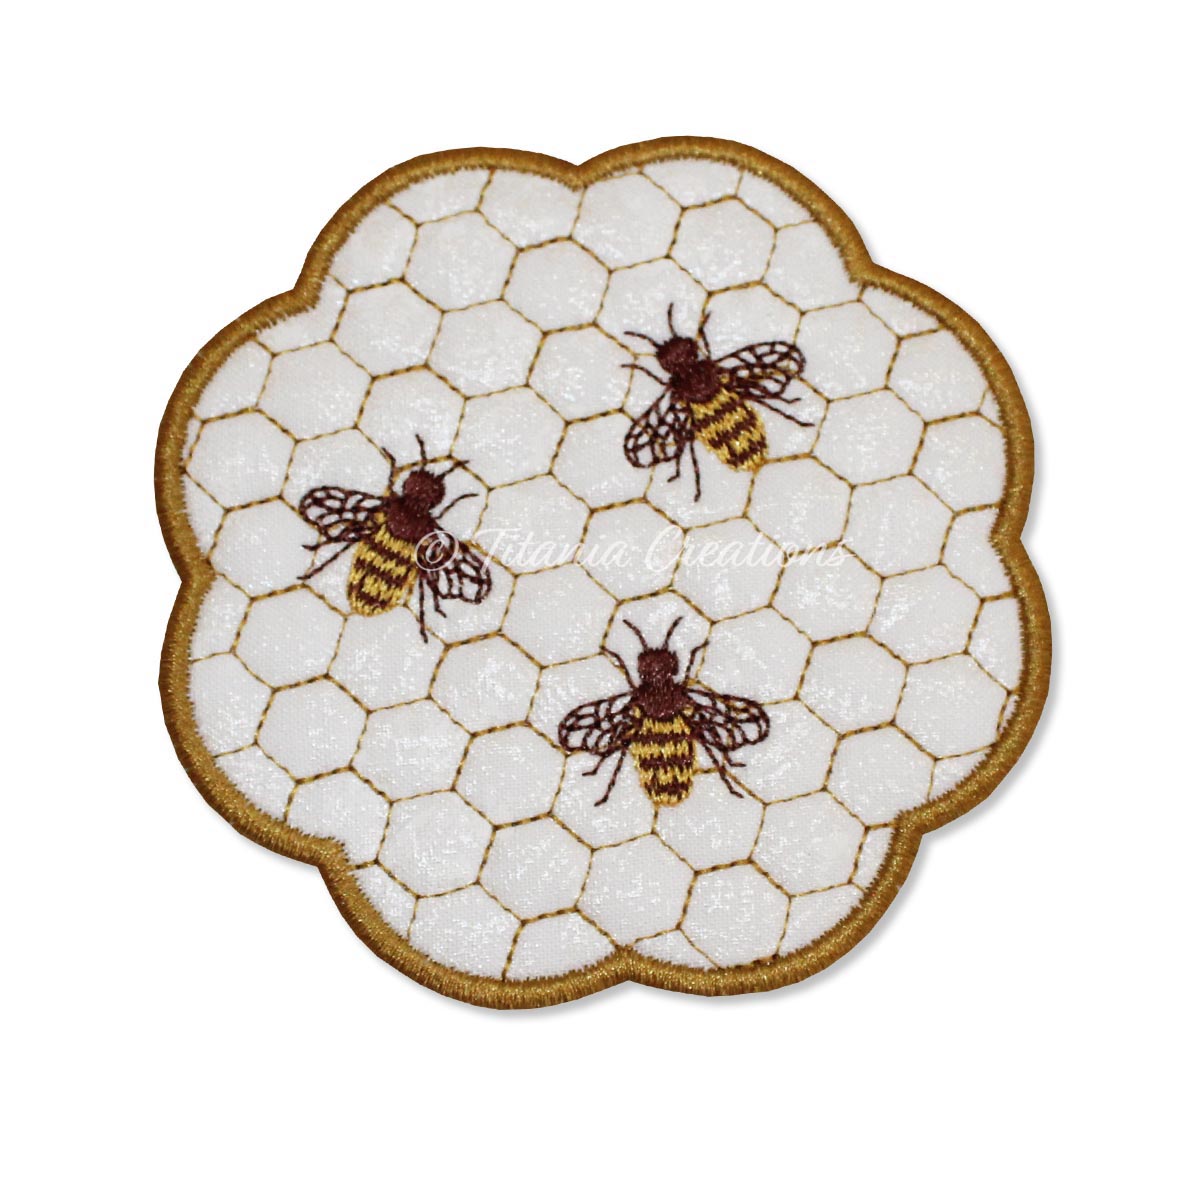 ITH Honey Bee Mat 4x4